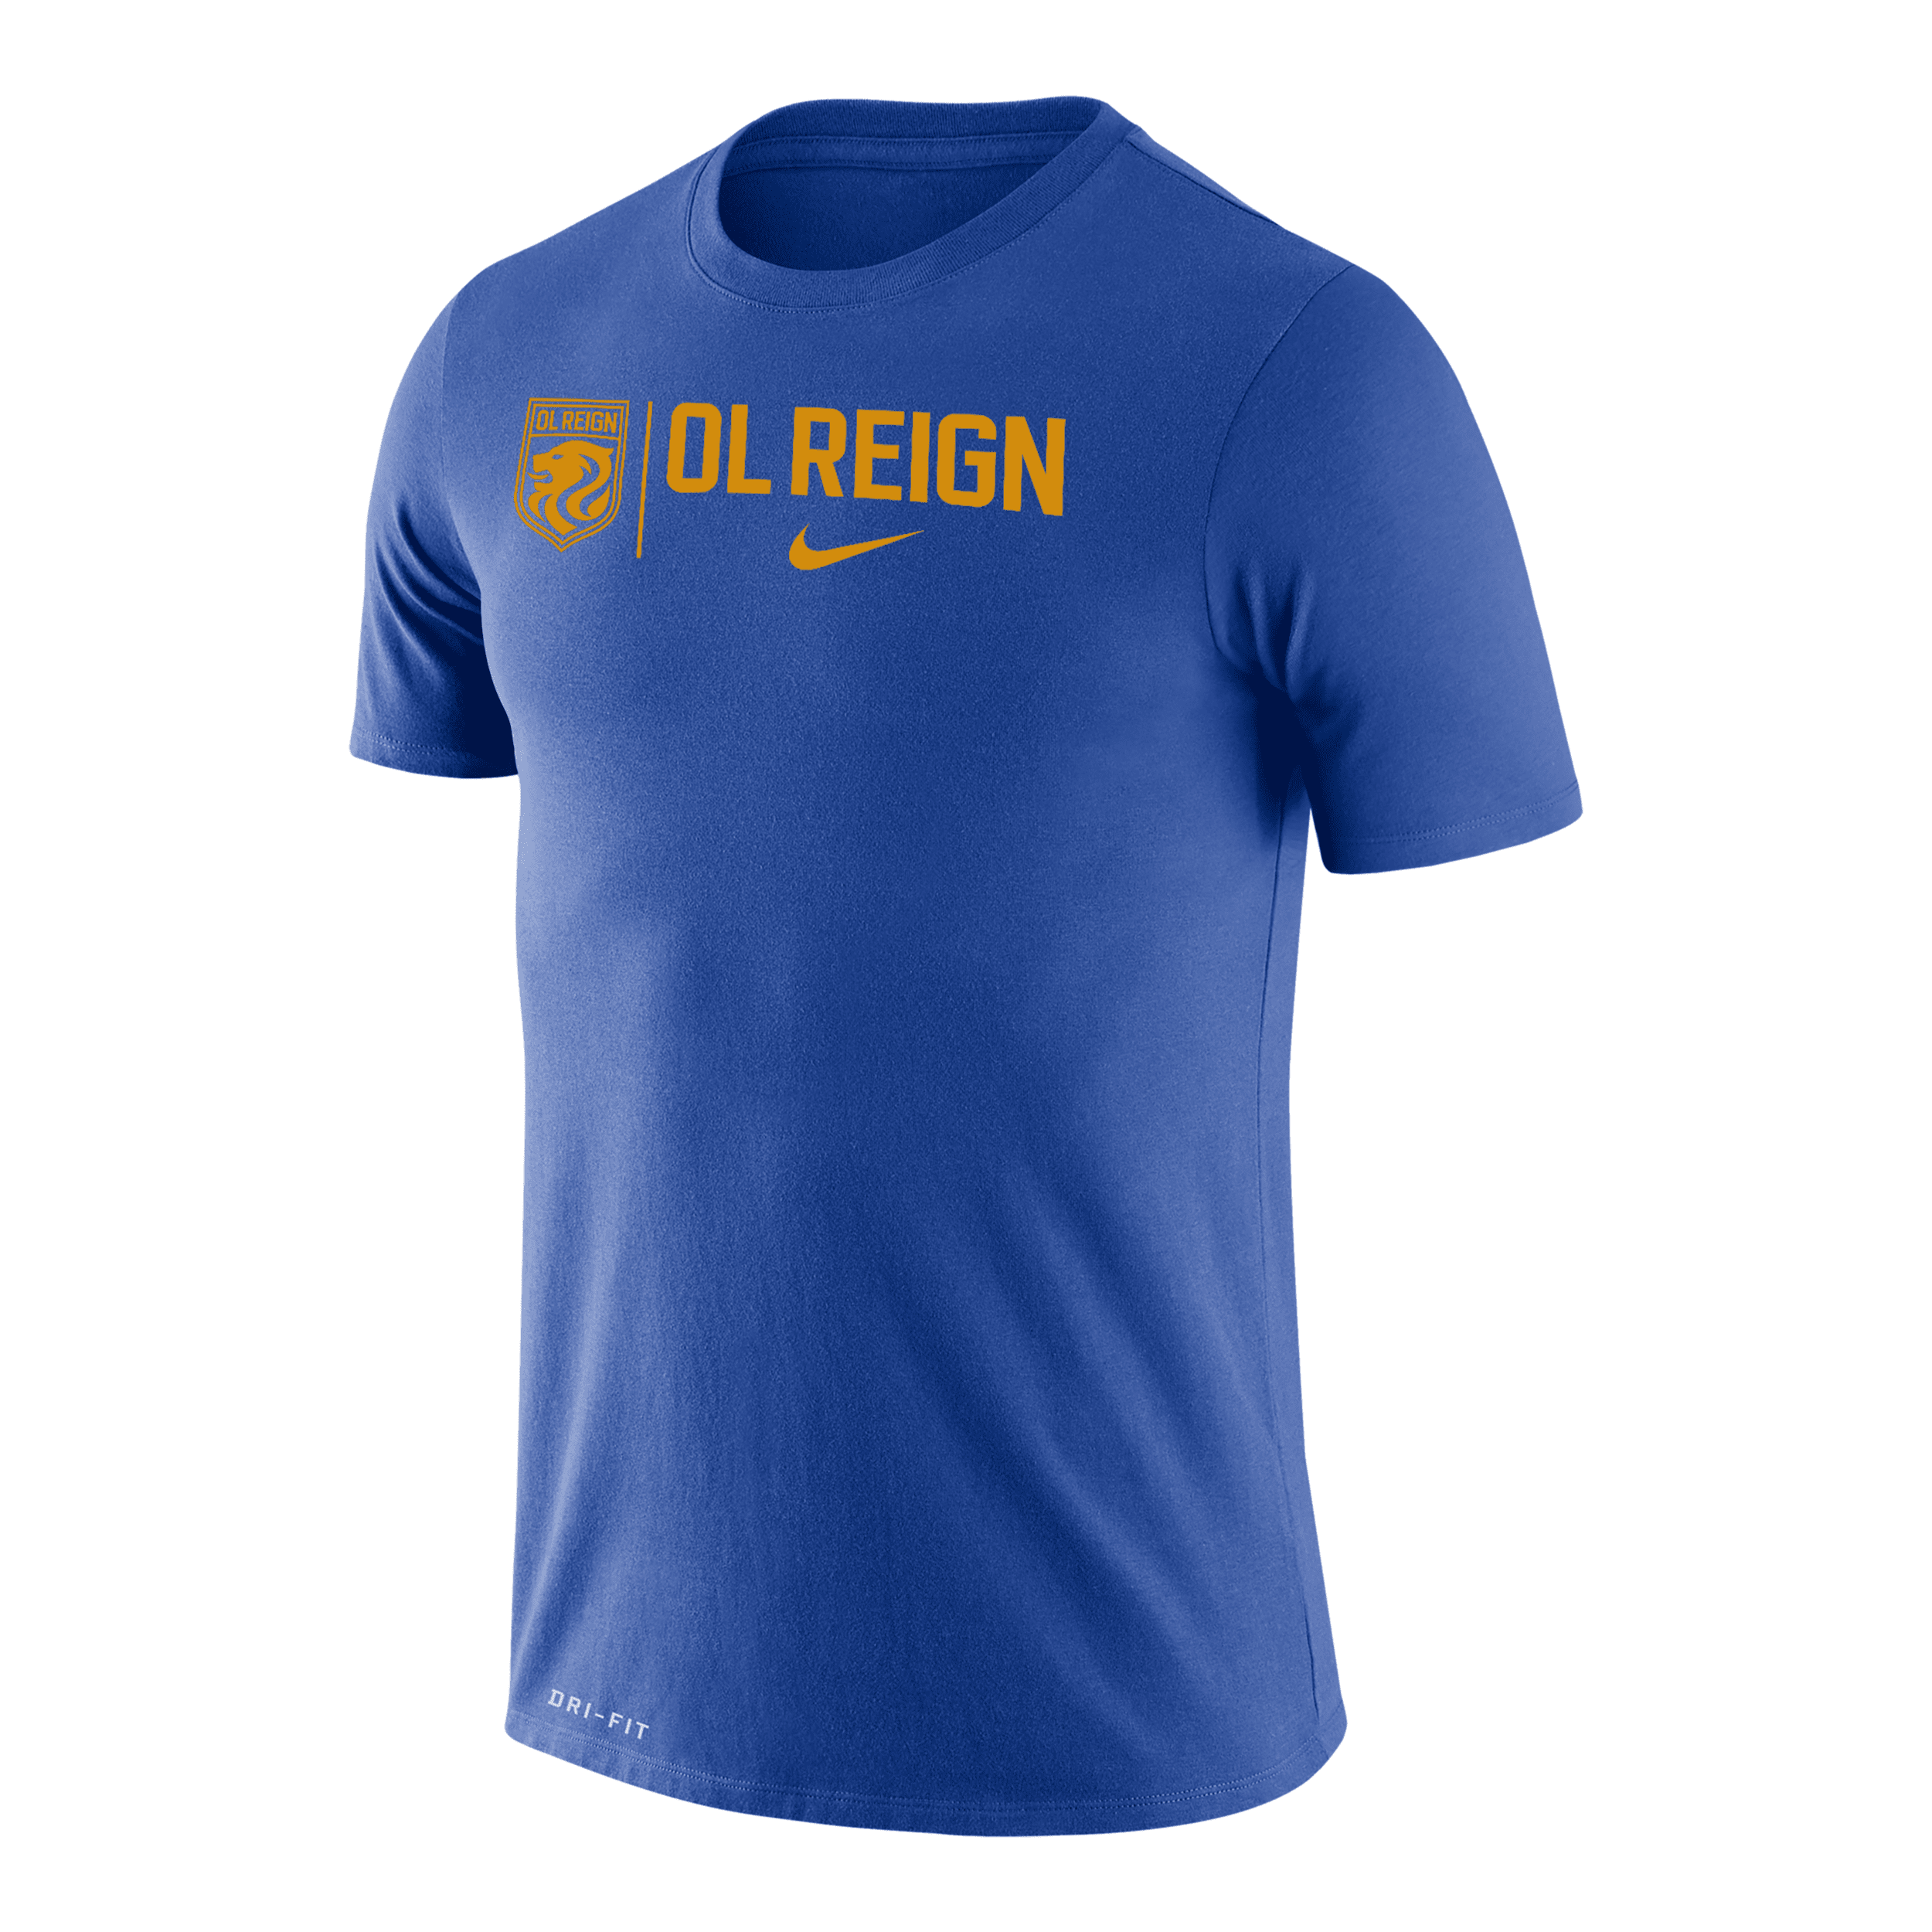 Nike Ol Reign Legend  Men's Dri-fit Soccer T-shirt In Blue